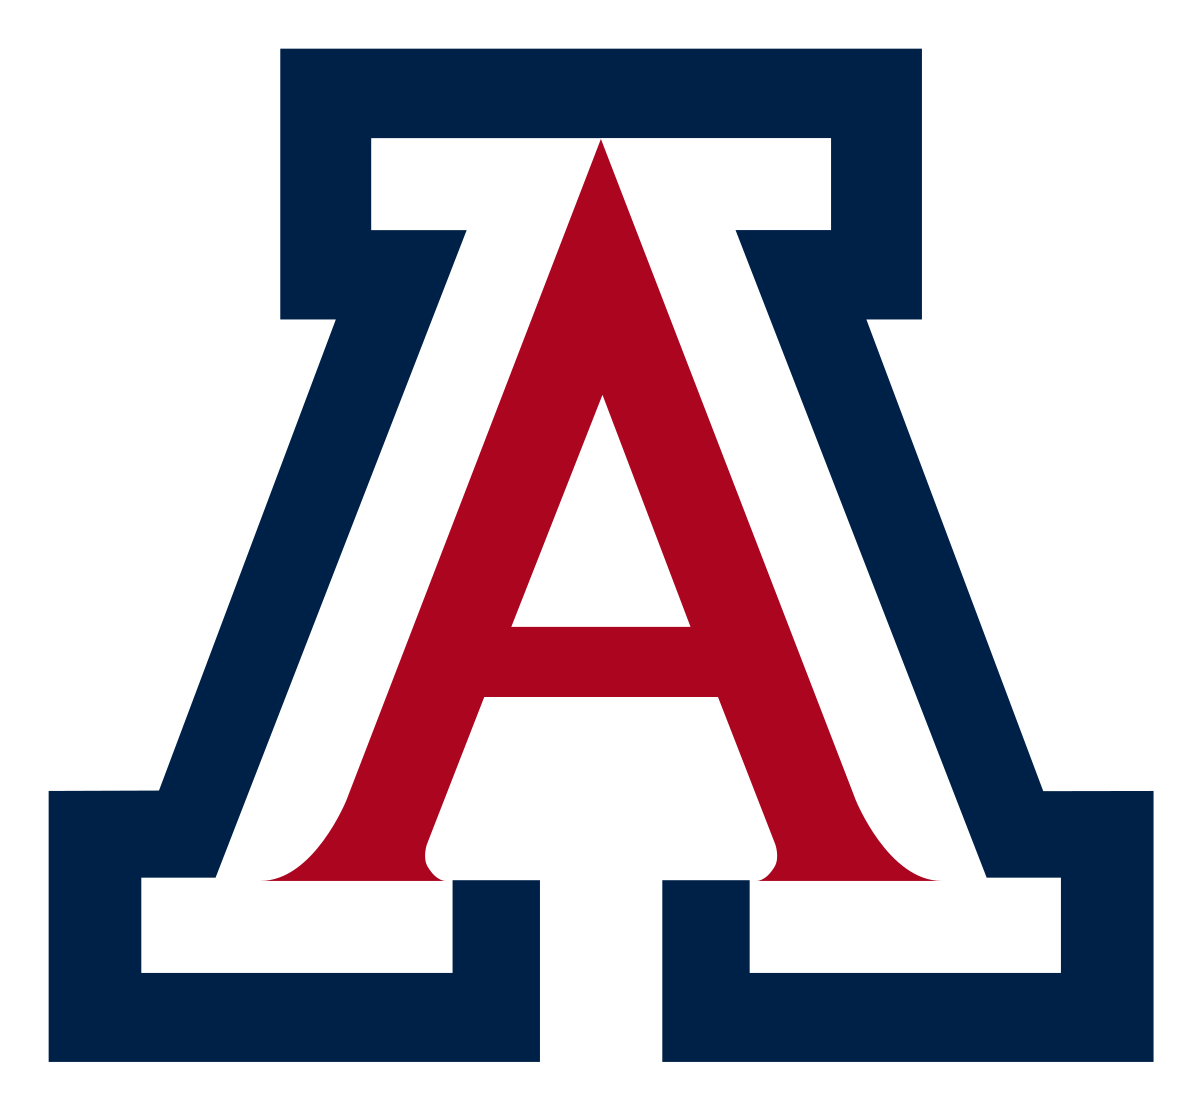 2017–18 Arizona Wildcats men's basketball team